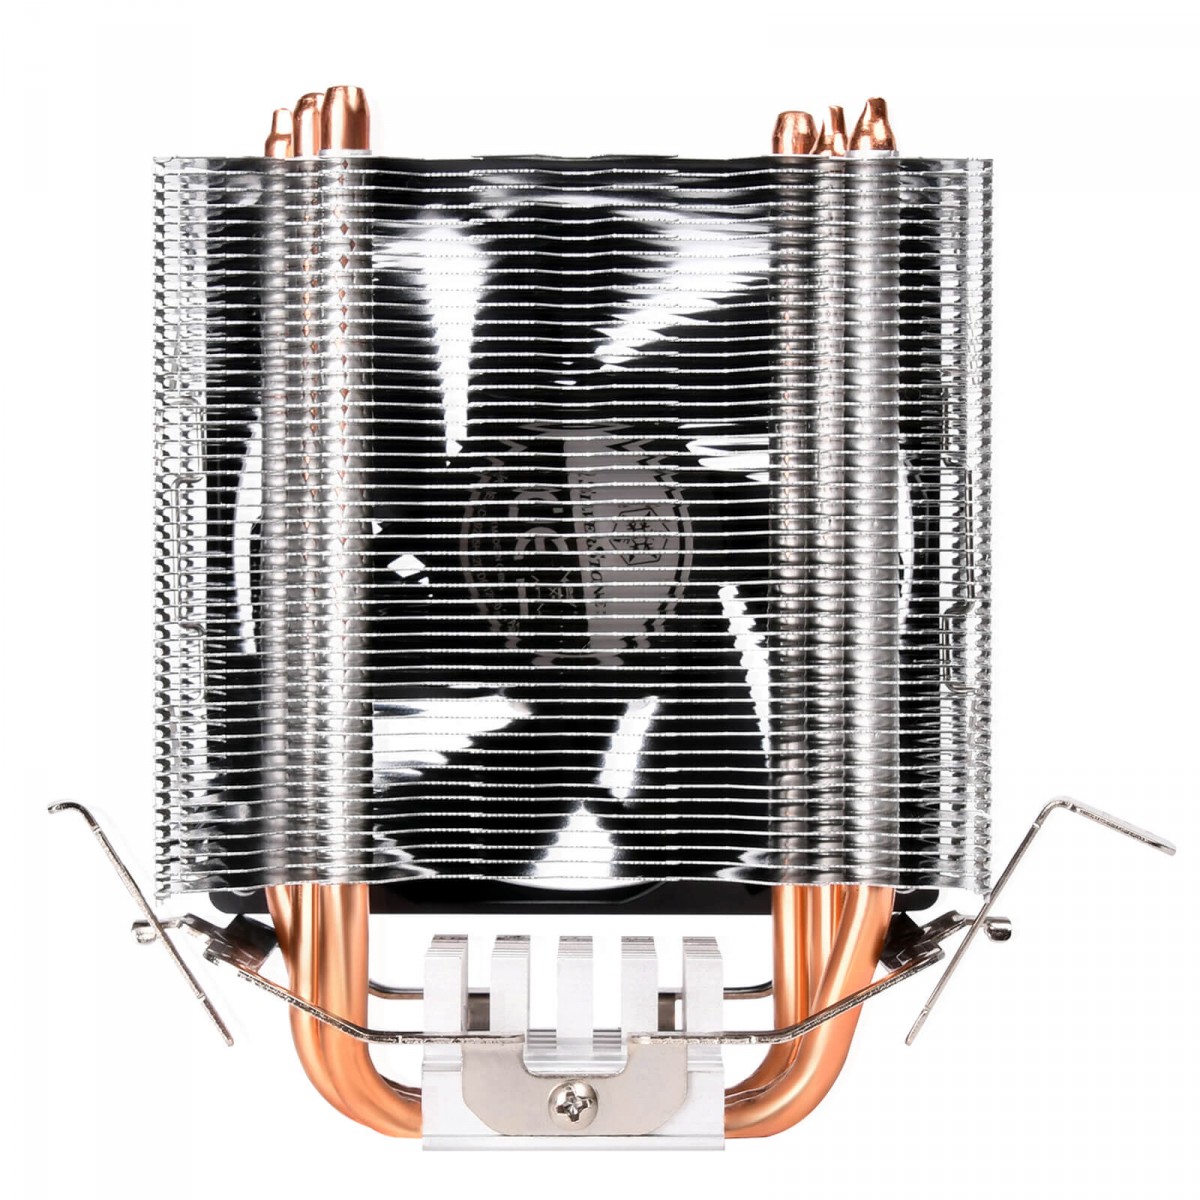 Cooler para Processador SilverStone KR02, 92mm, Intel-AMD, SST-KR02